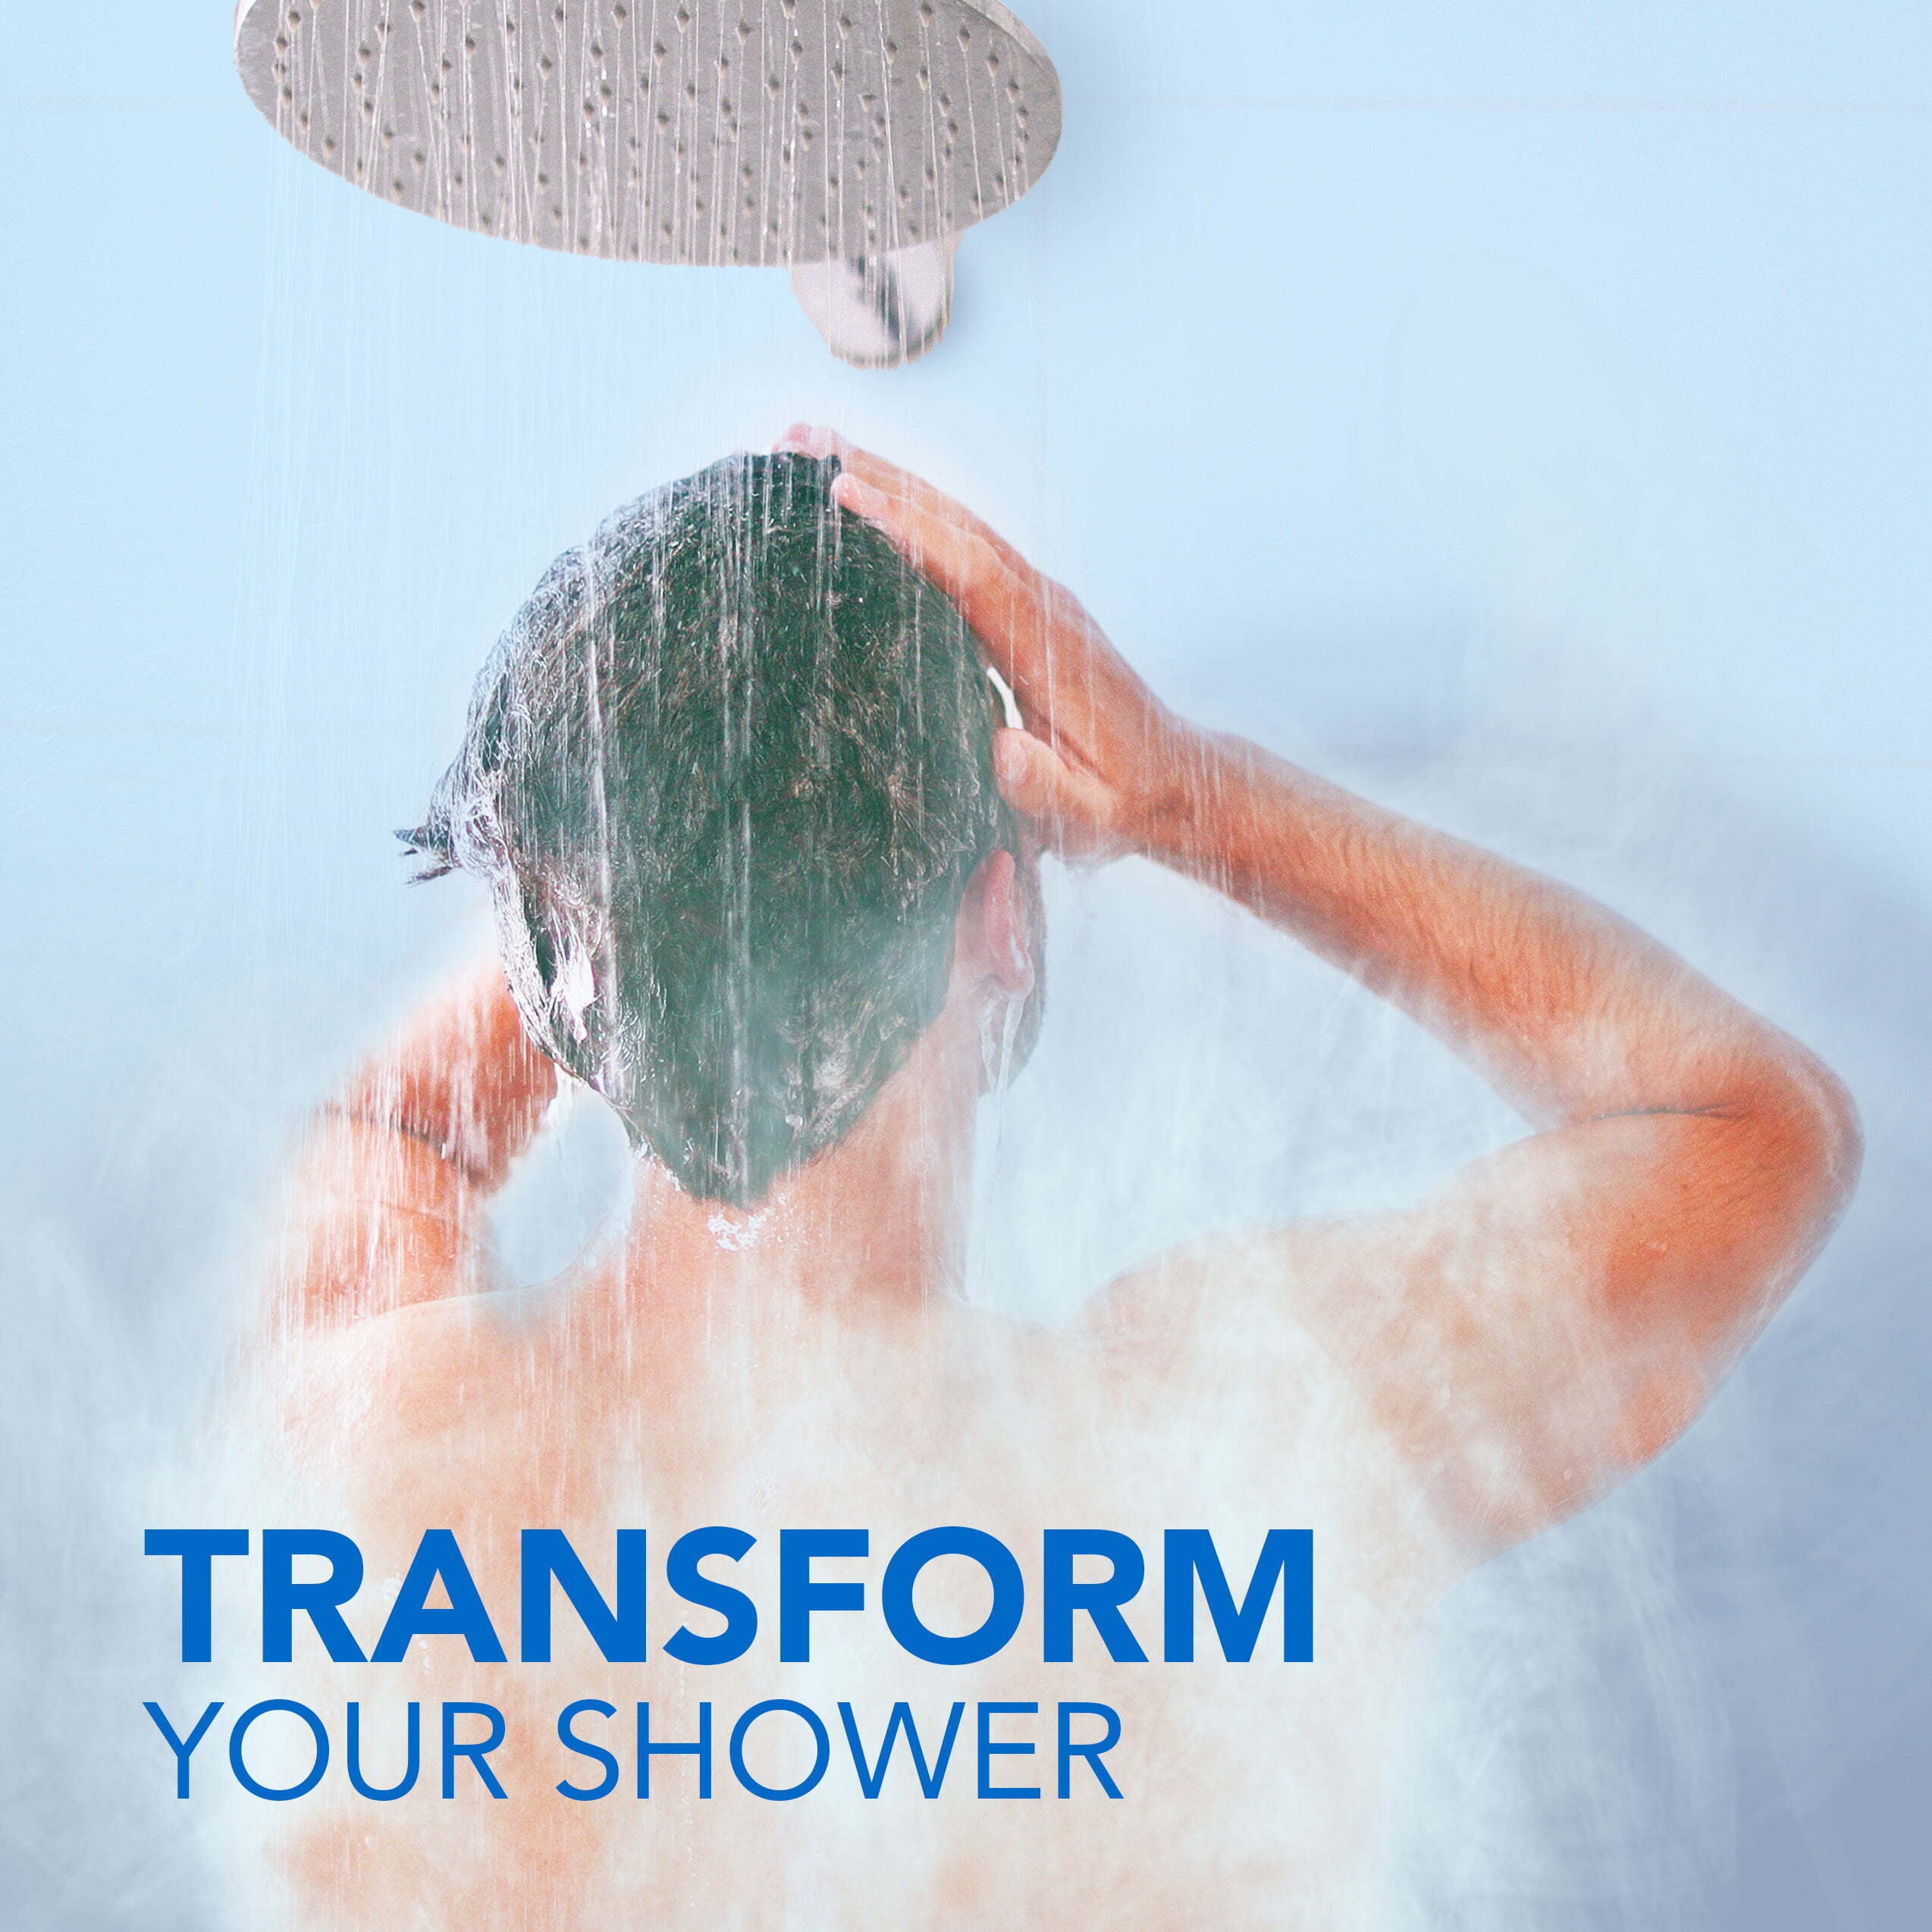 Vicks Vapo Shower, Dissolvable Shower Tablets for Cold Relief